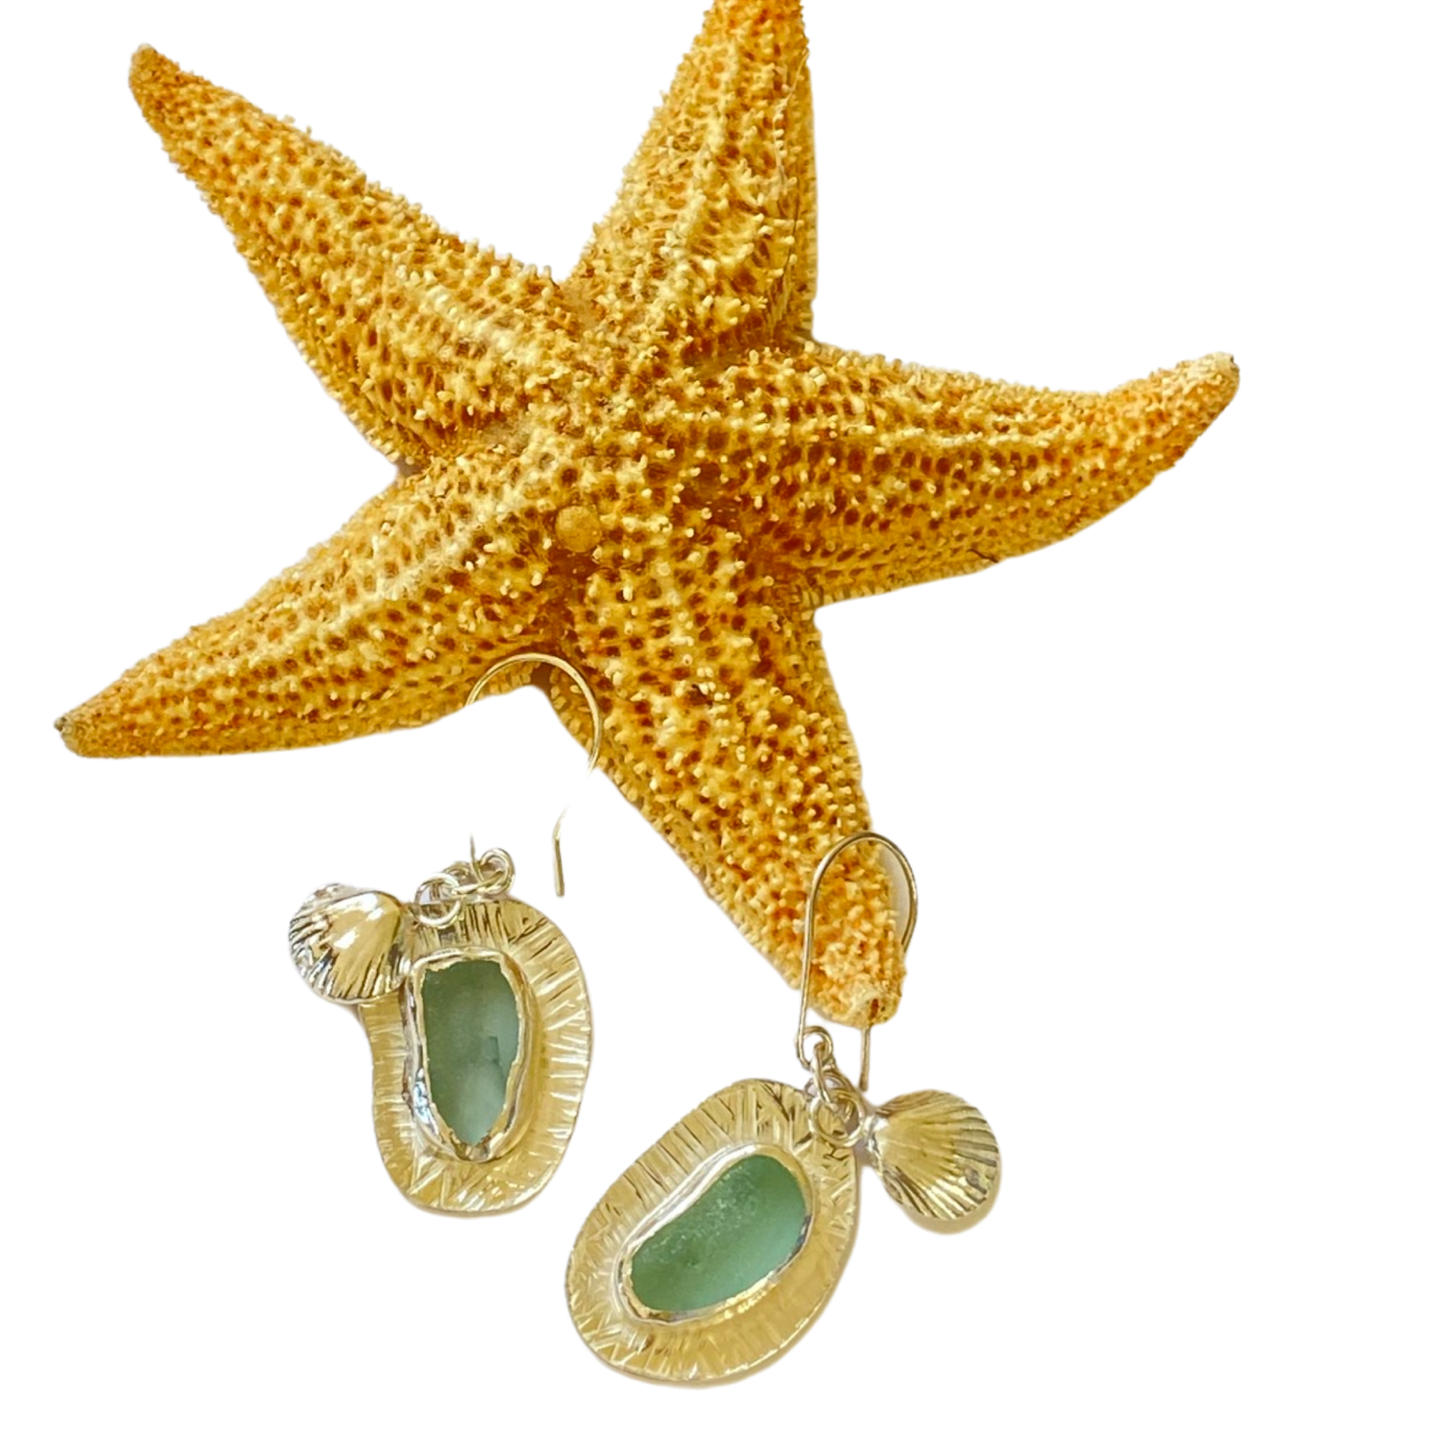 Ocean Sea Glass with Clam Charm - Love Beach Beads